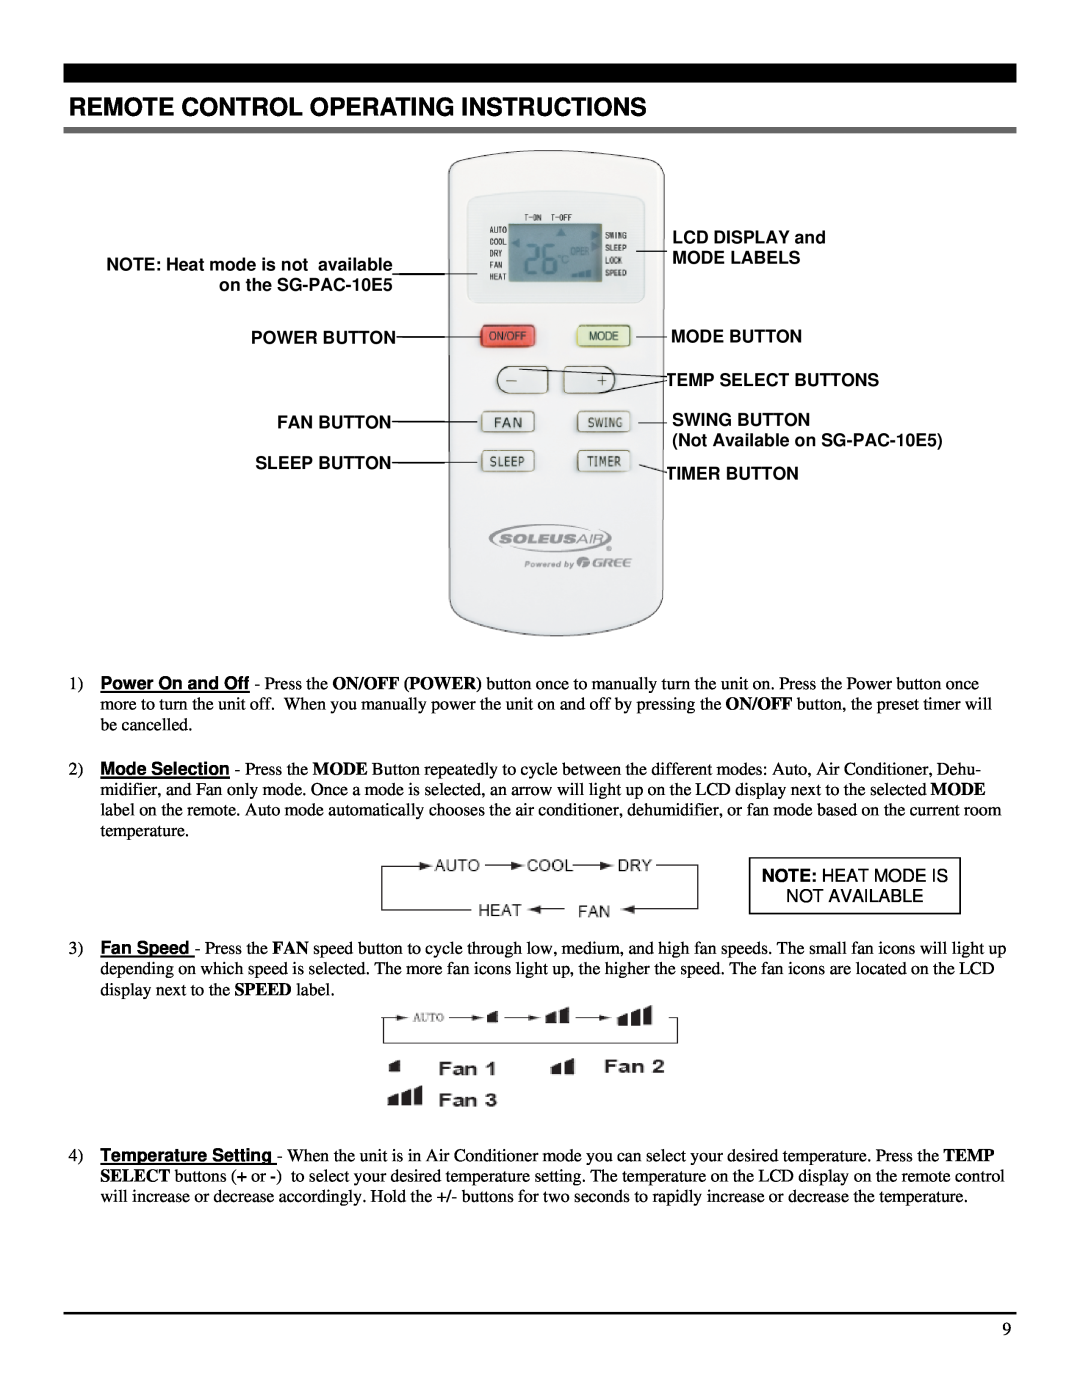 Soleus Air SG-PAC-10E5 manual Remote Control Operating Instructions, Power Button Fan Button Sleep Button 